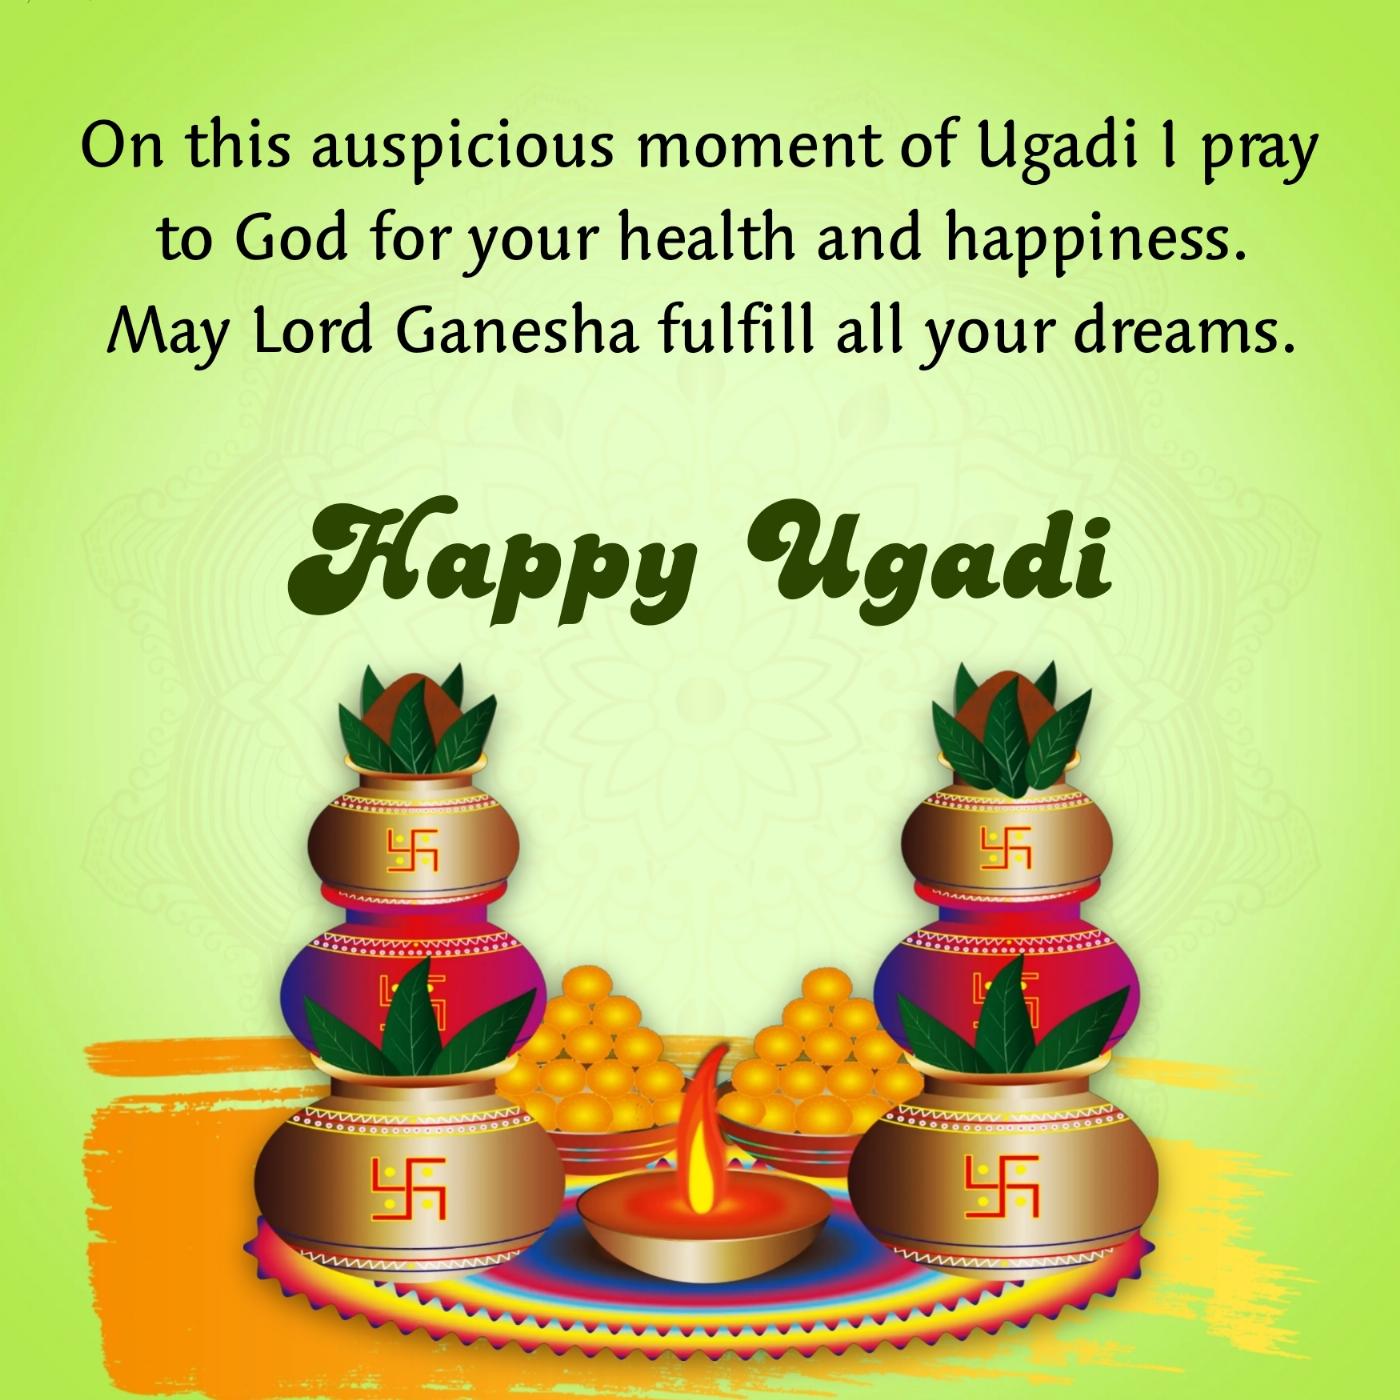 On this auspicious moment of Ugadi I pray to God